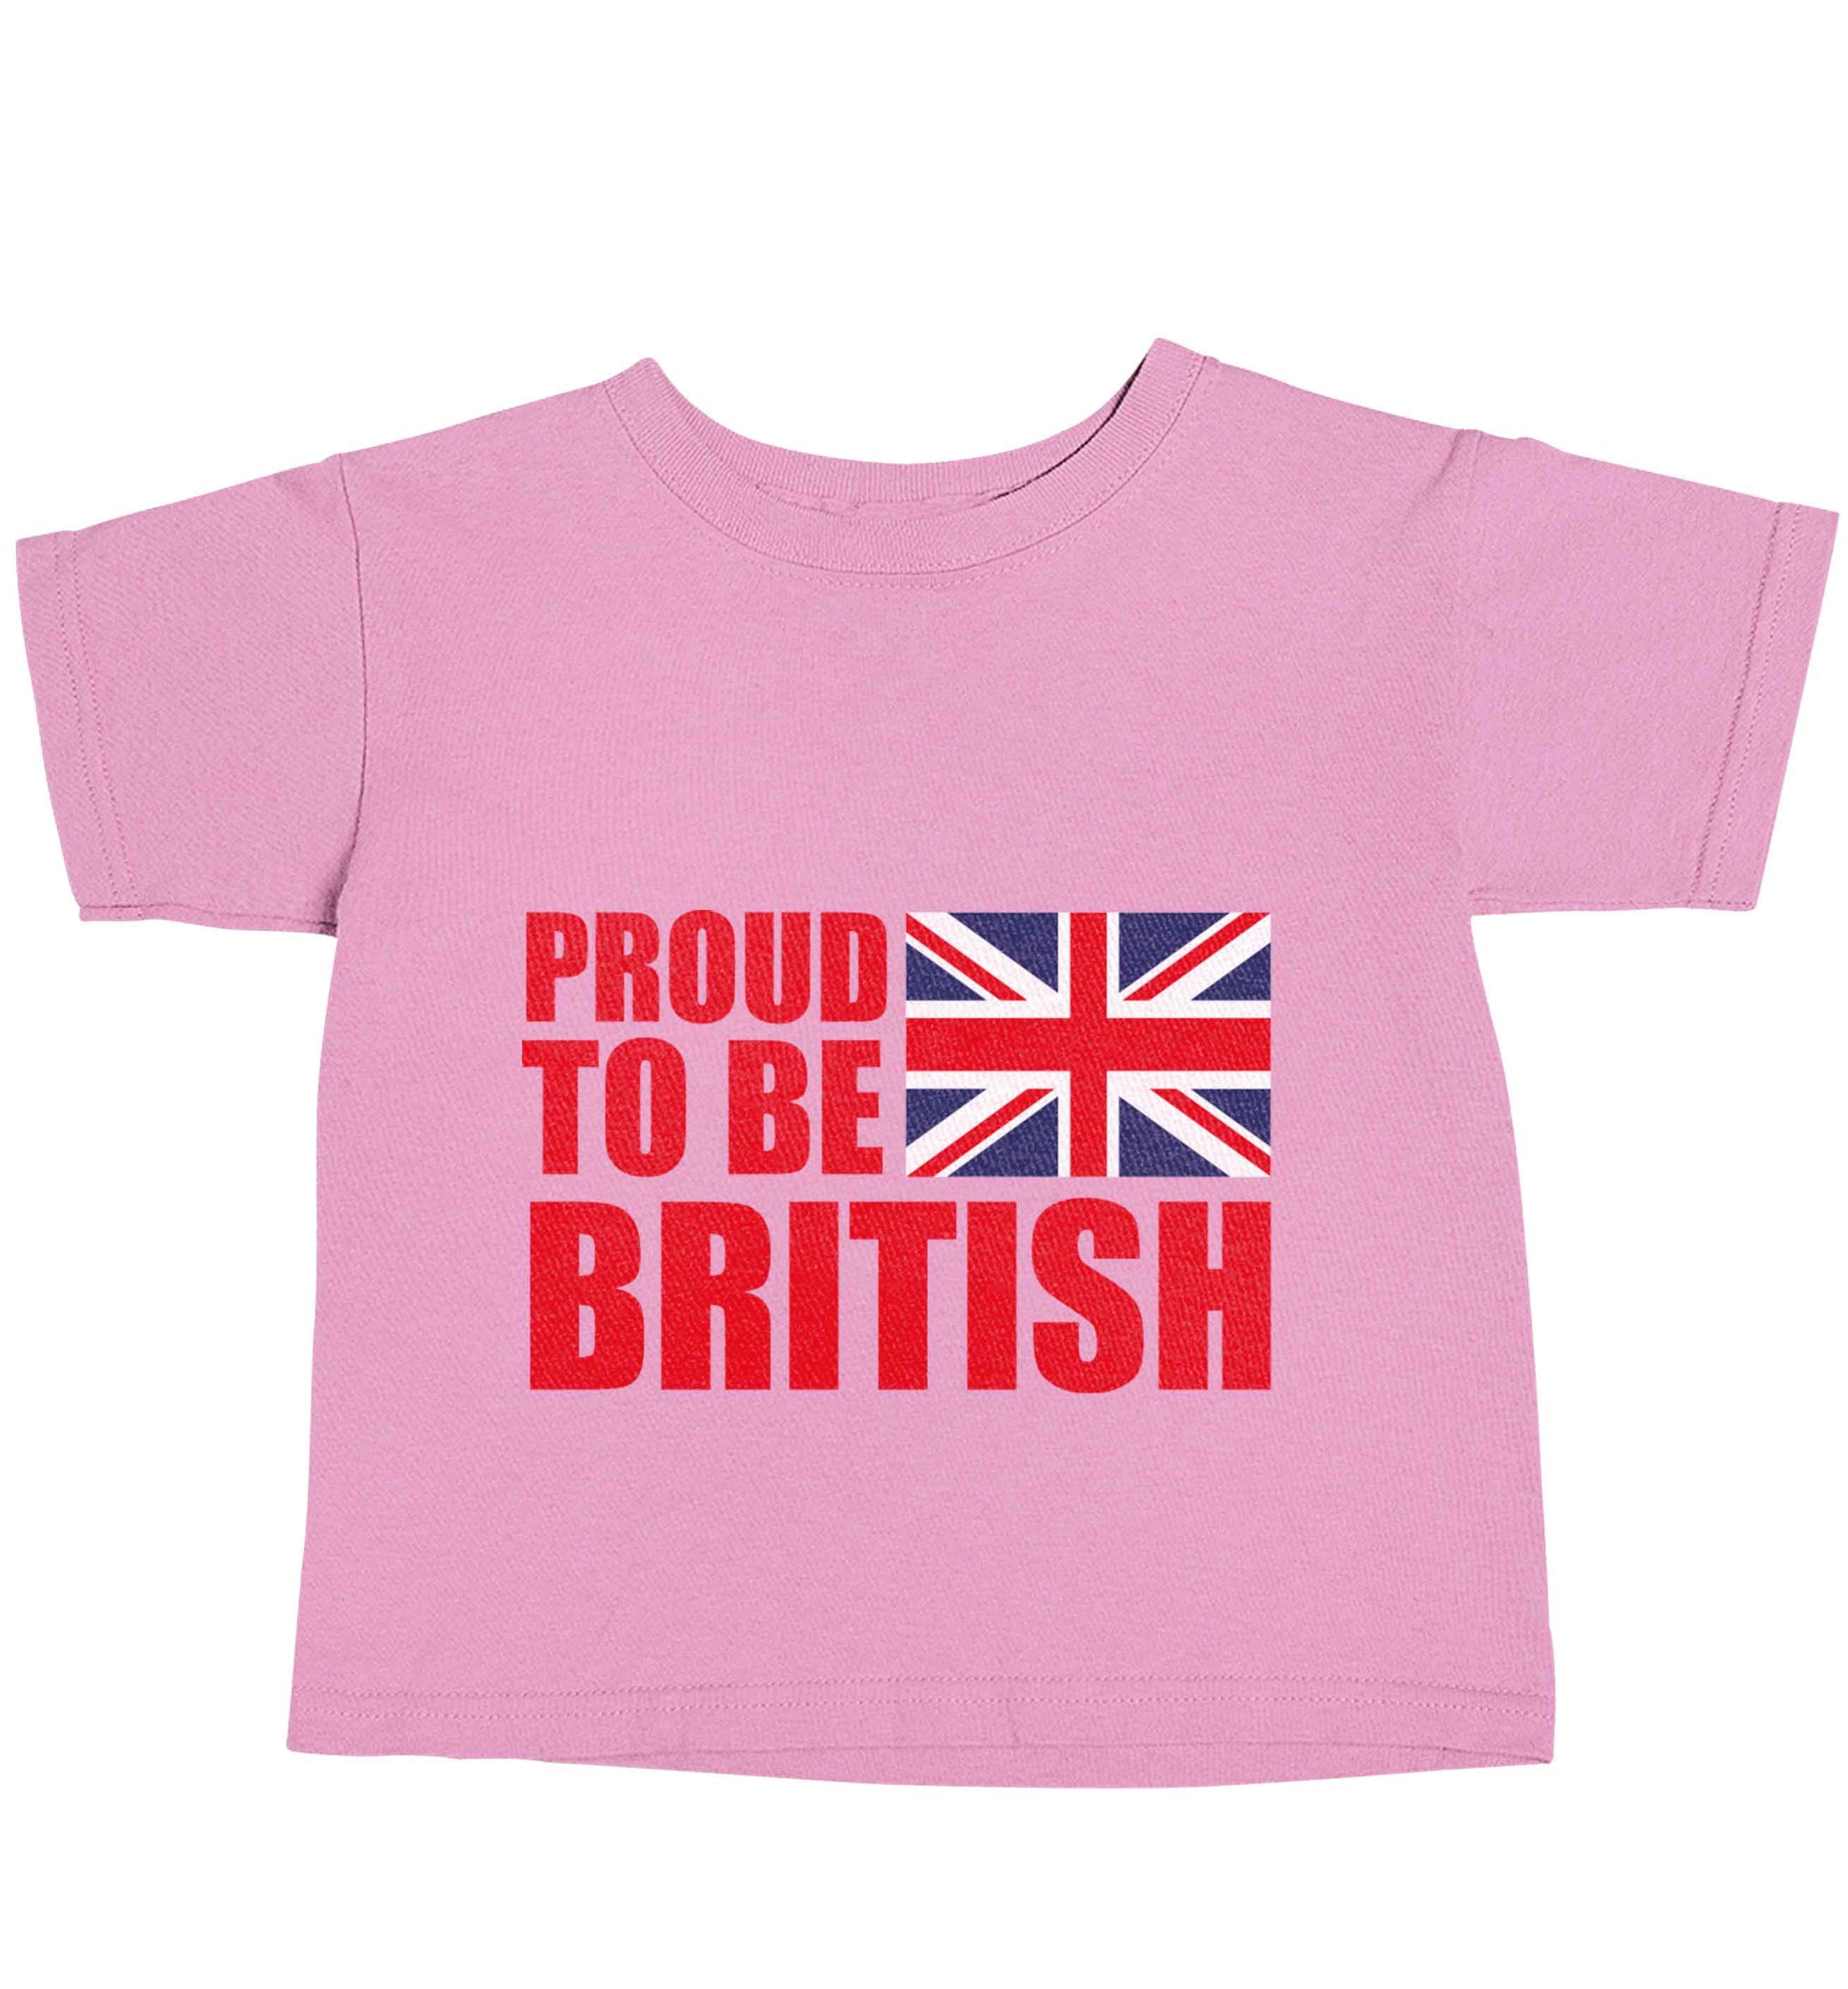 Proud to be British light pink baby toddler Tshirt 2 Years